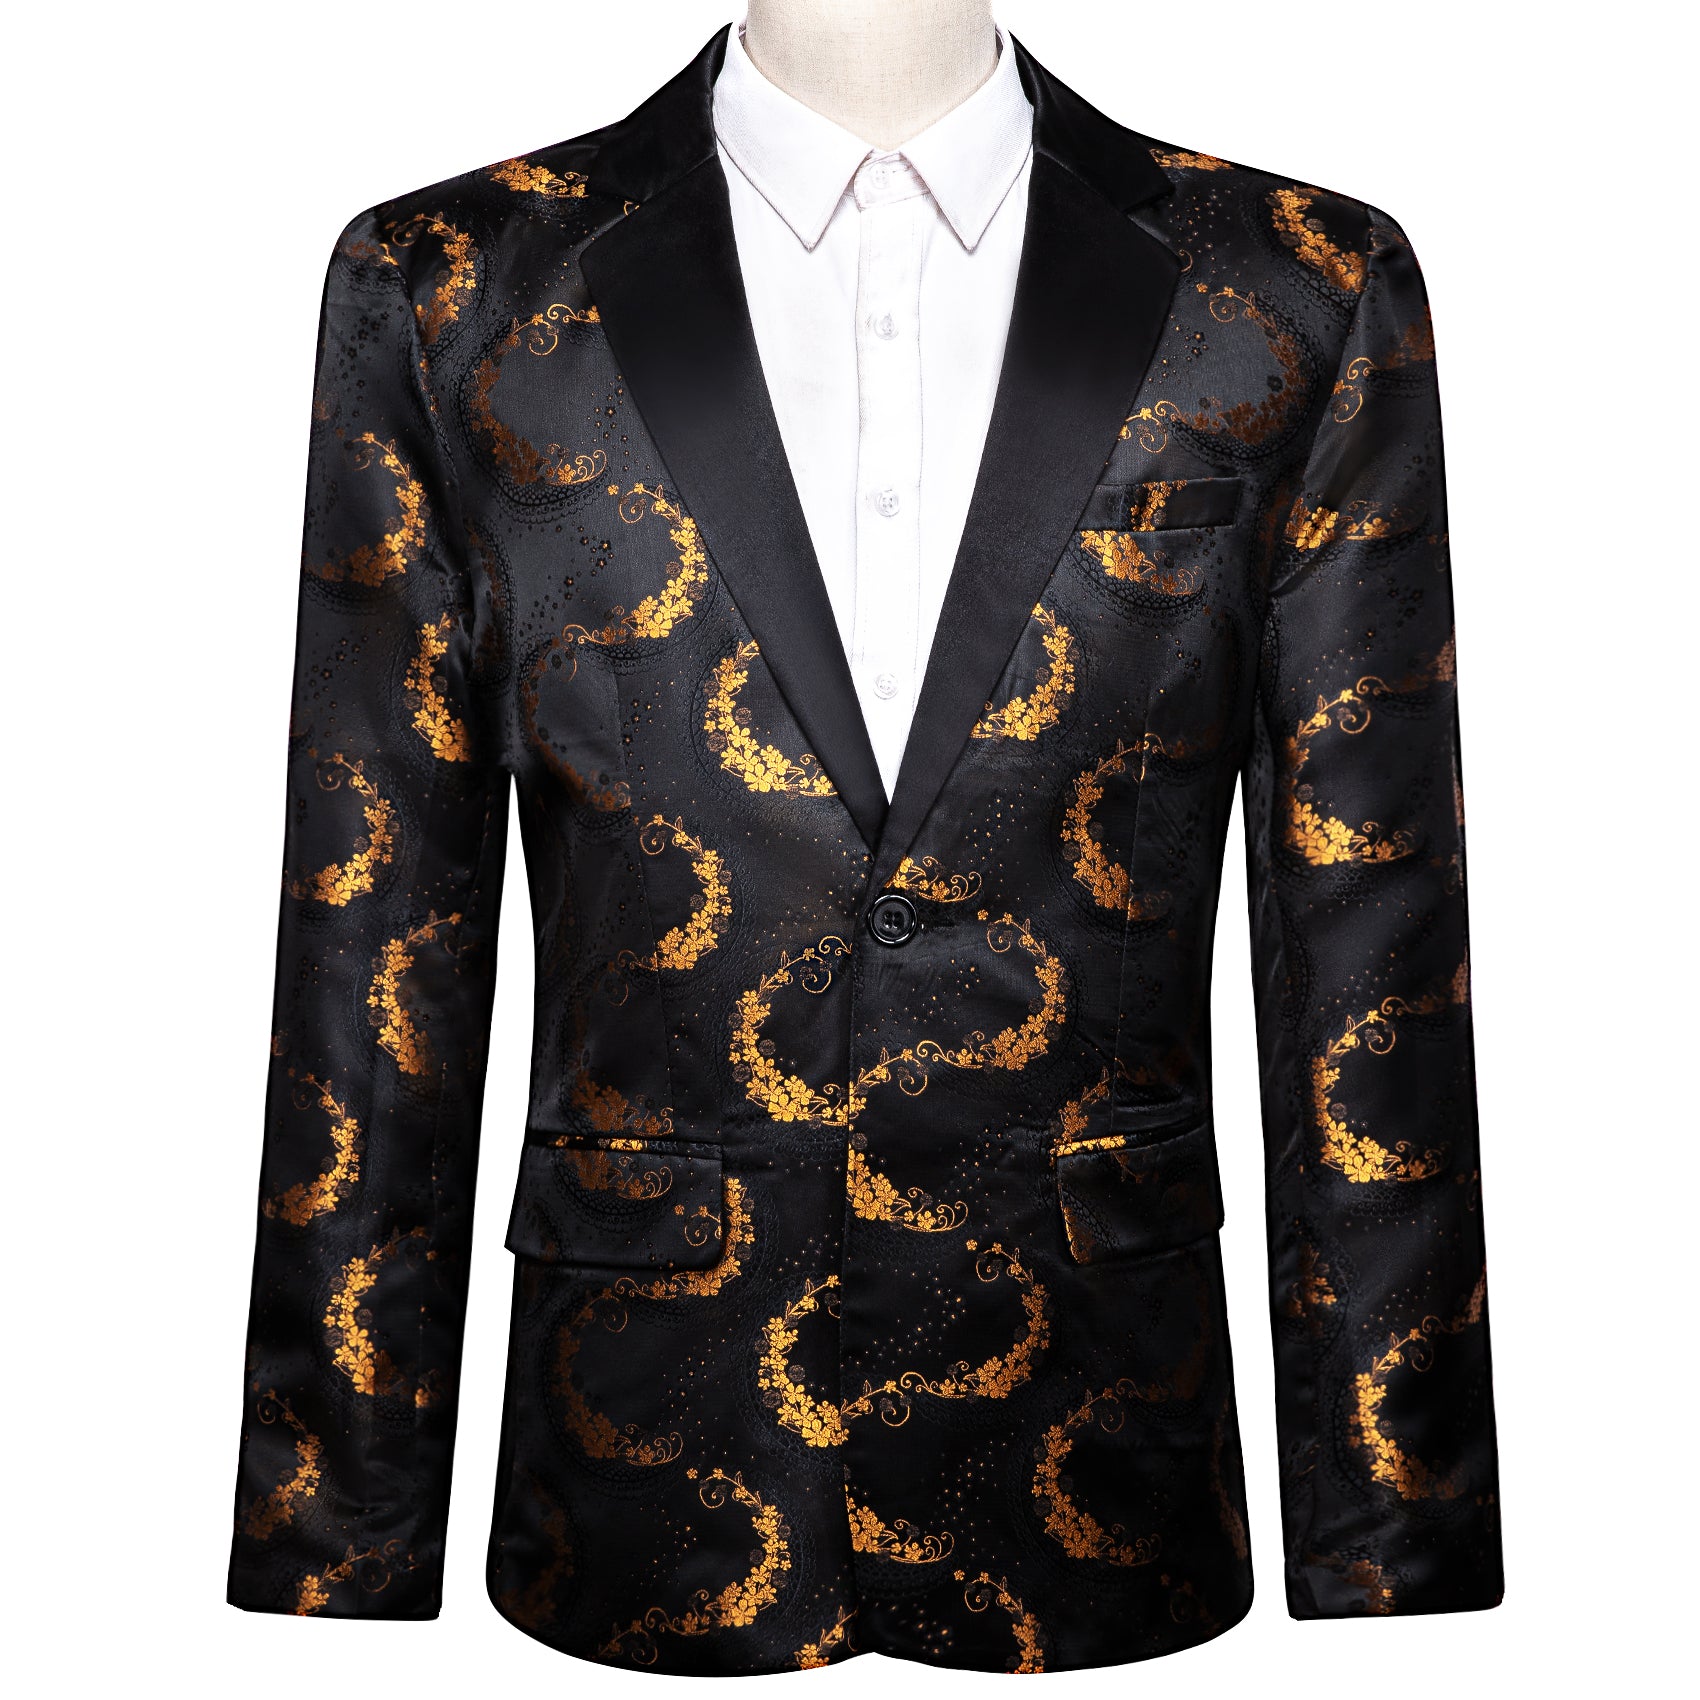 Black Gold Floral Notched Collar Suit